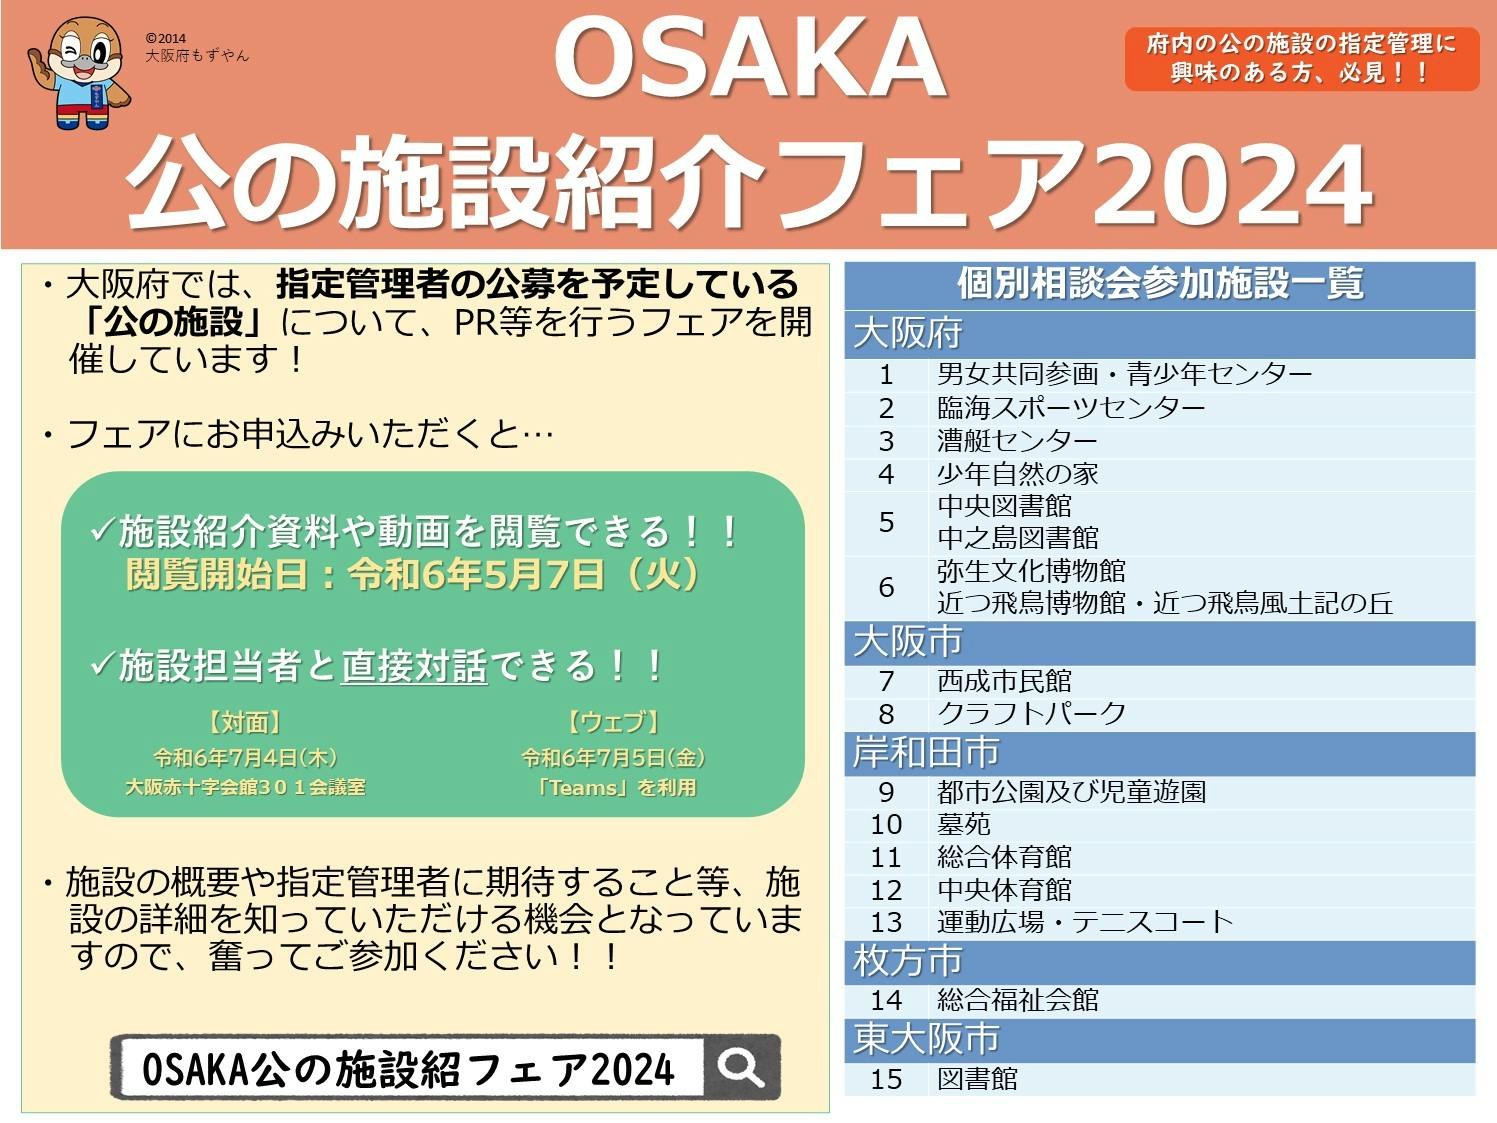 「OSAKA公の施設紹介フェア2024」を開催しています ～自治体施設の指定管理に興味のある方はぜひお申込みを！～